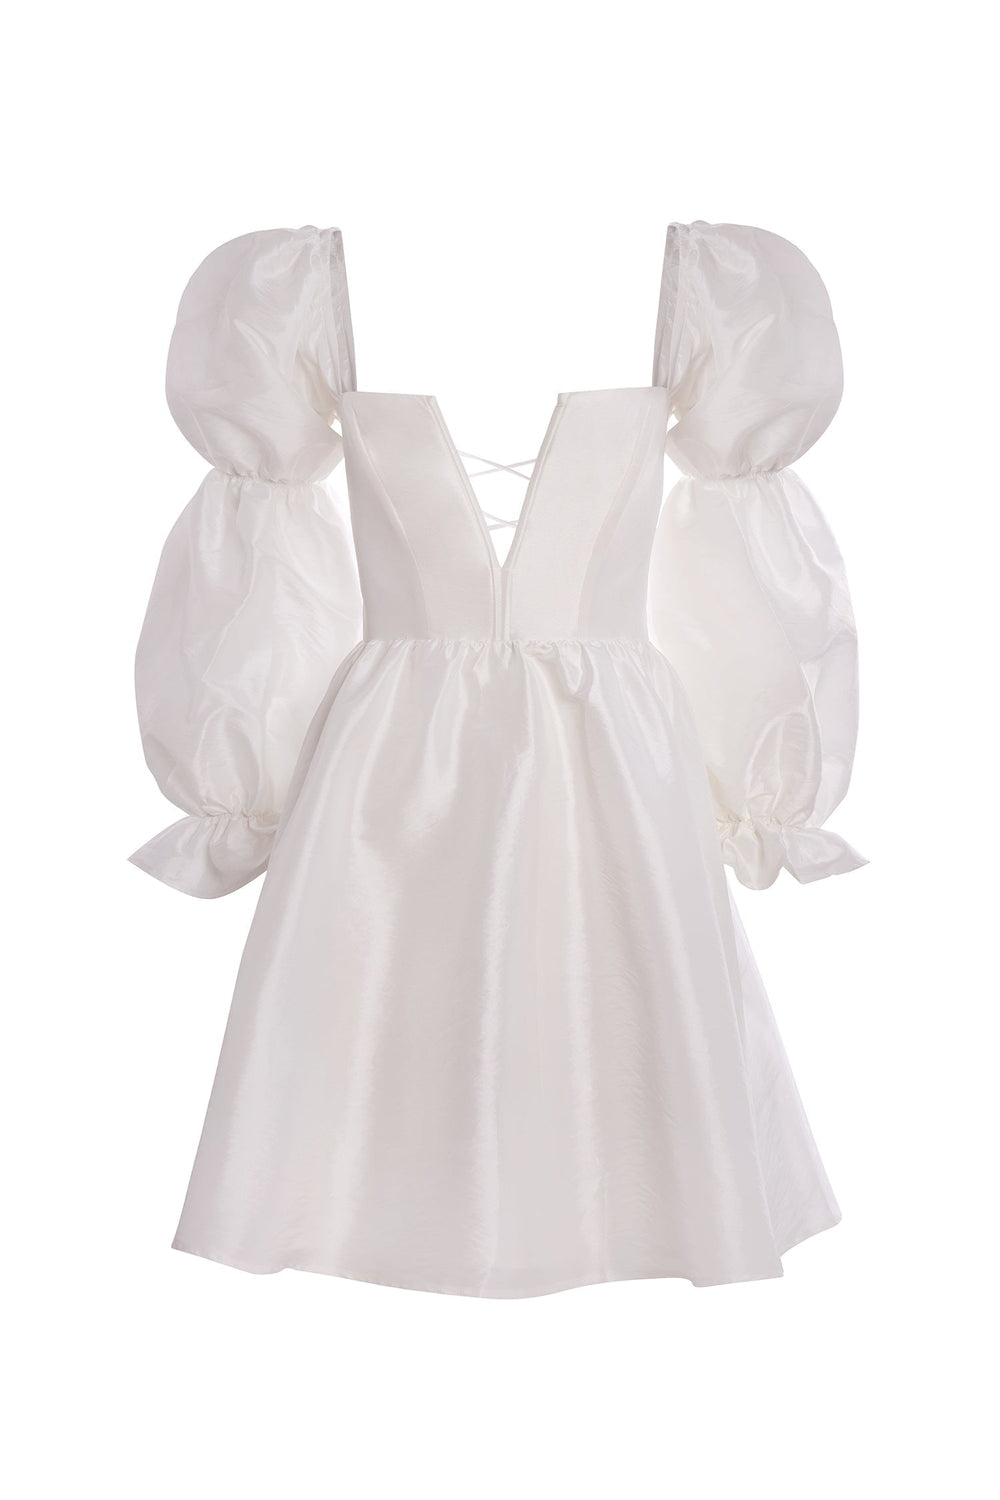 Faith - White Taffeta Mini Dress with Plunge Neck and Long Sleeves